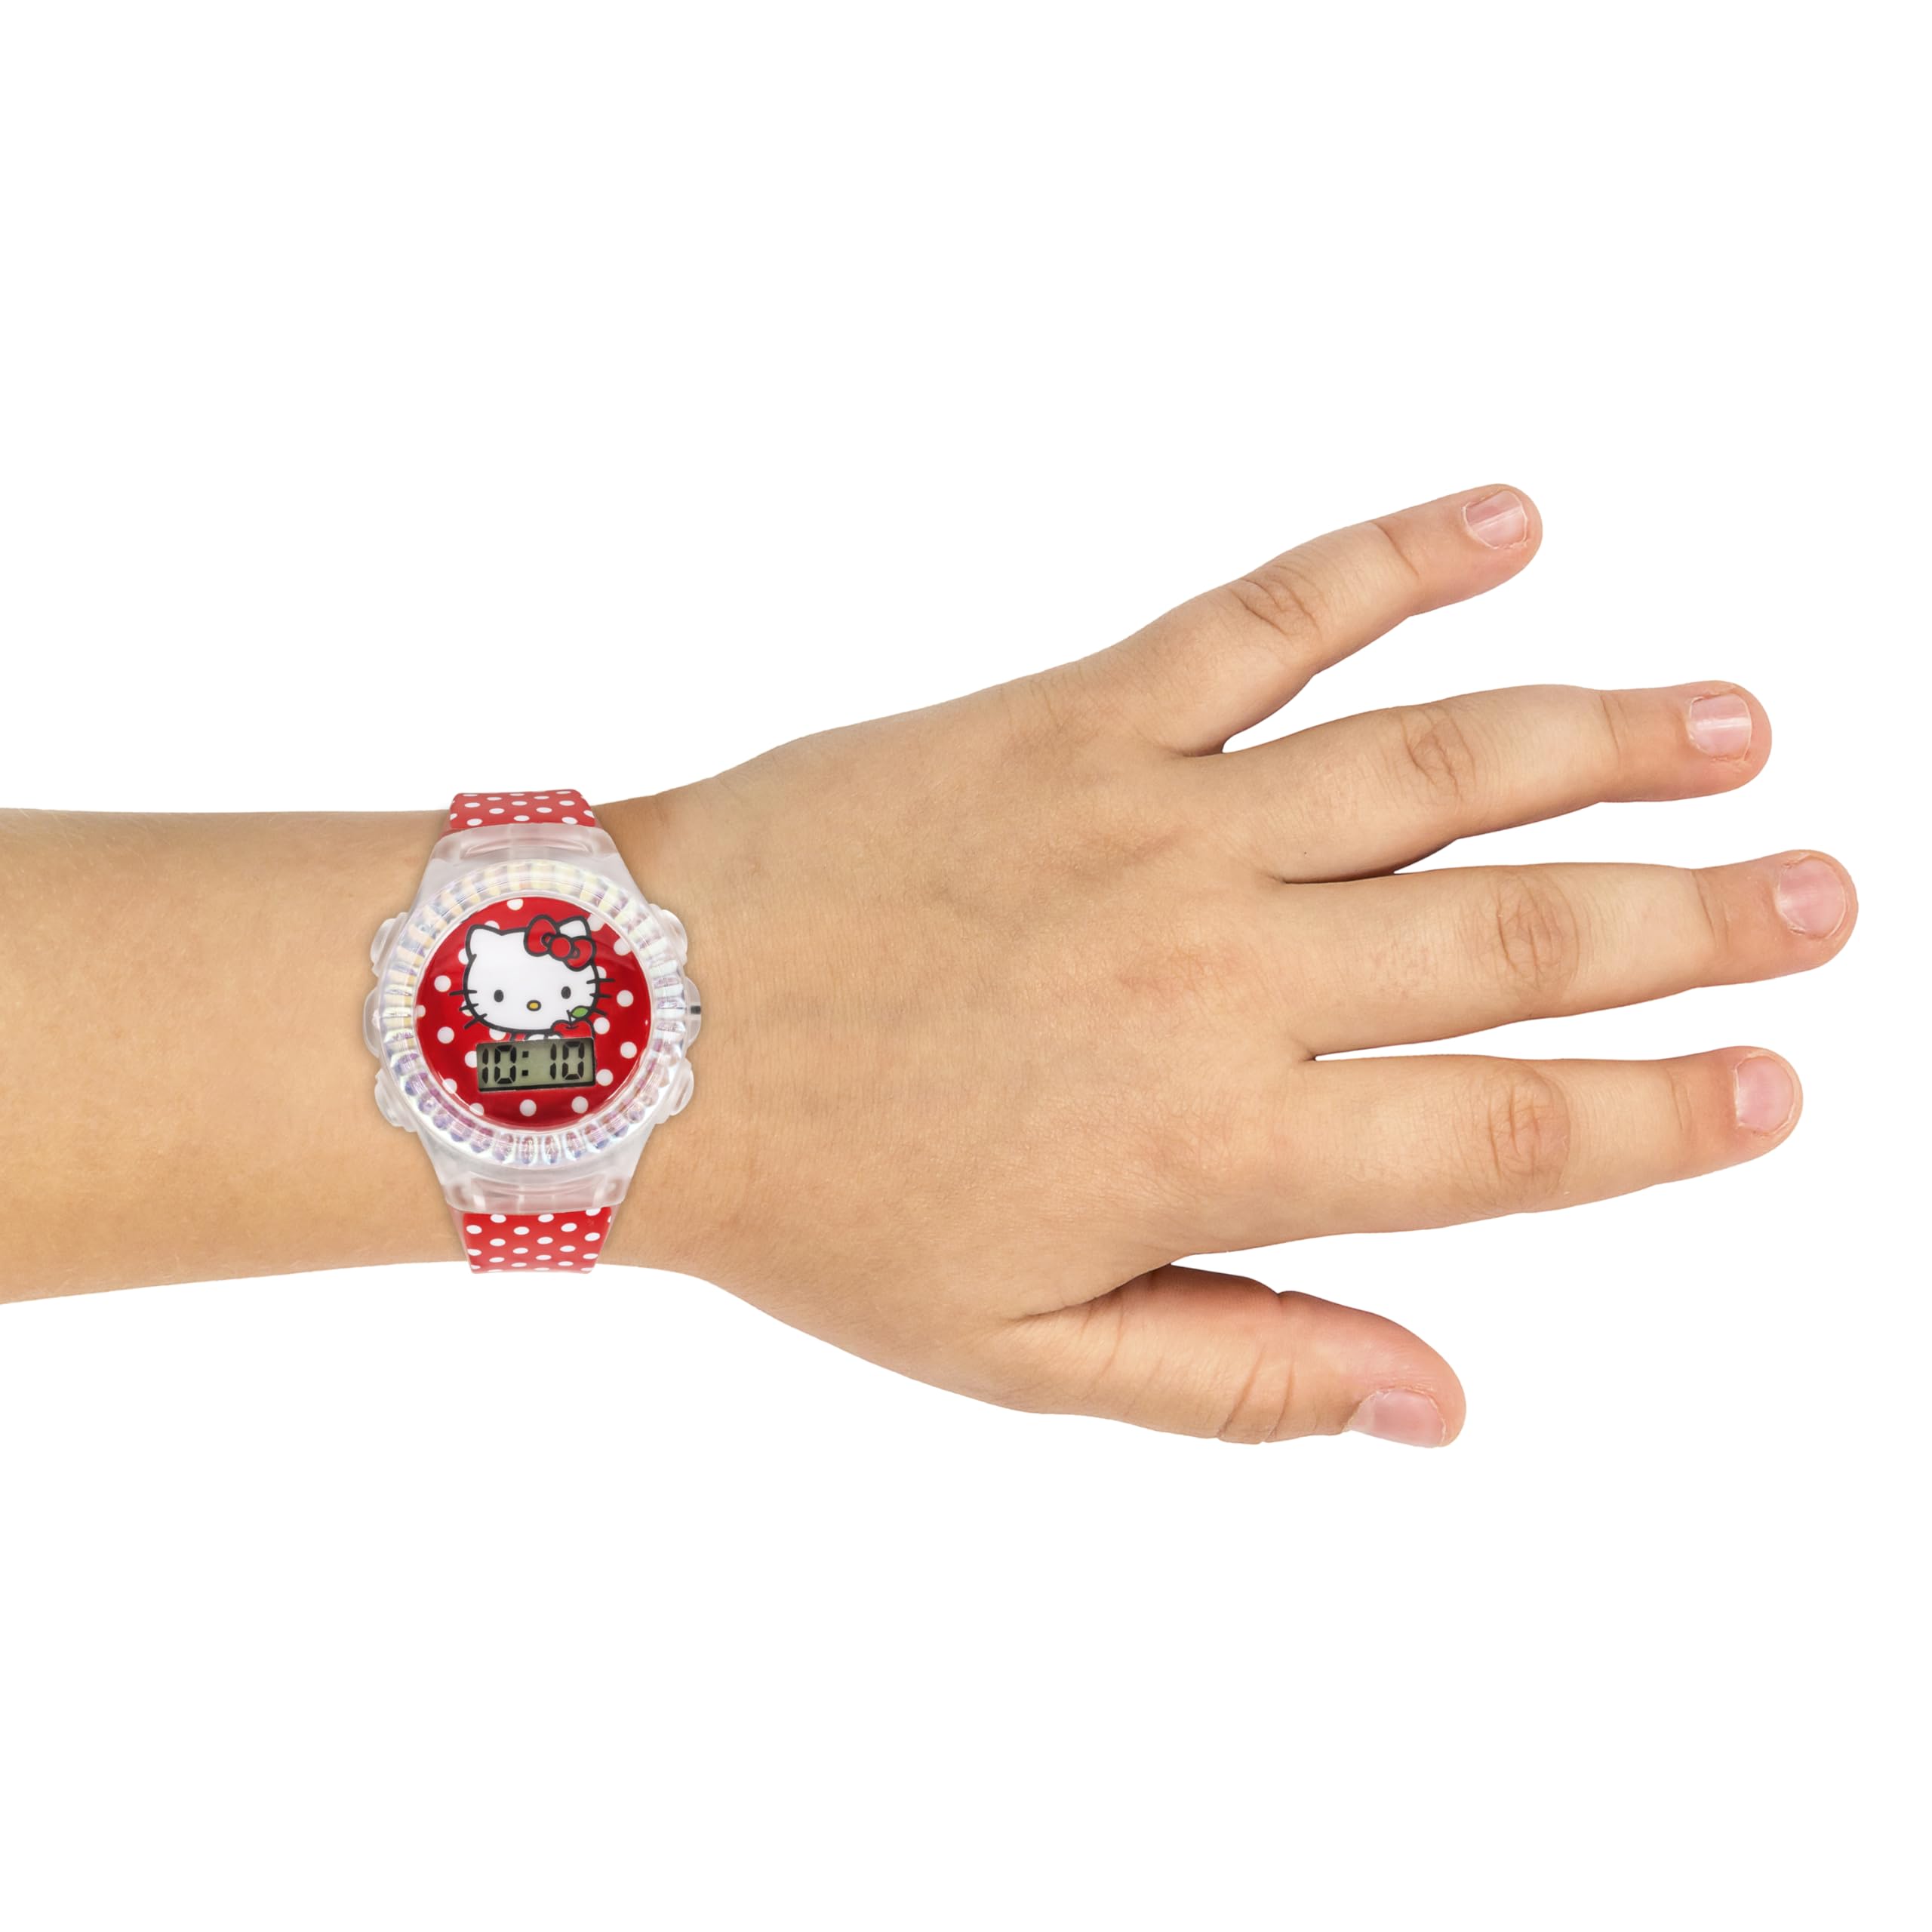 Accutime Hello Kitty Digital LCD Quartz Kids Red Watch for Girls with Polka Dot Print Band Strap (Model: HK4170AZ)